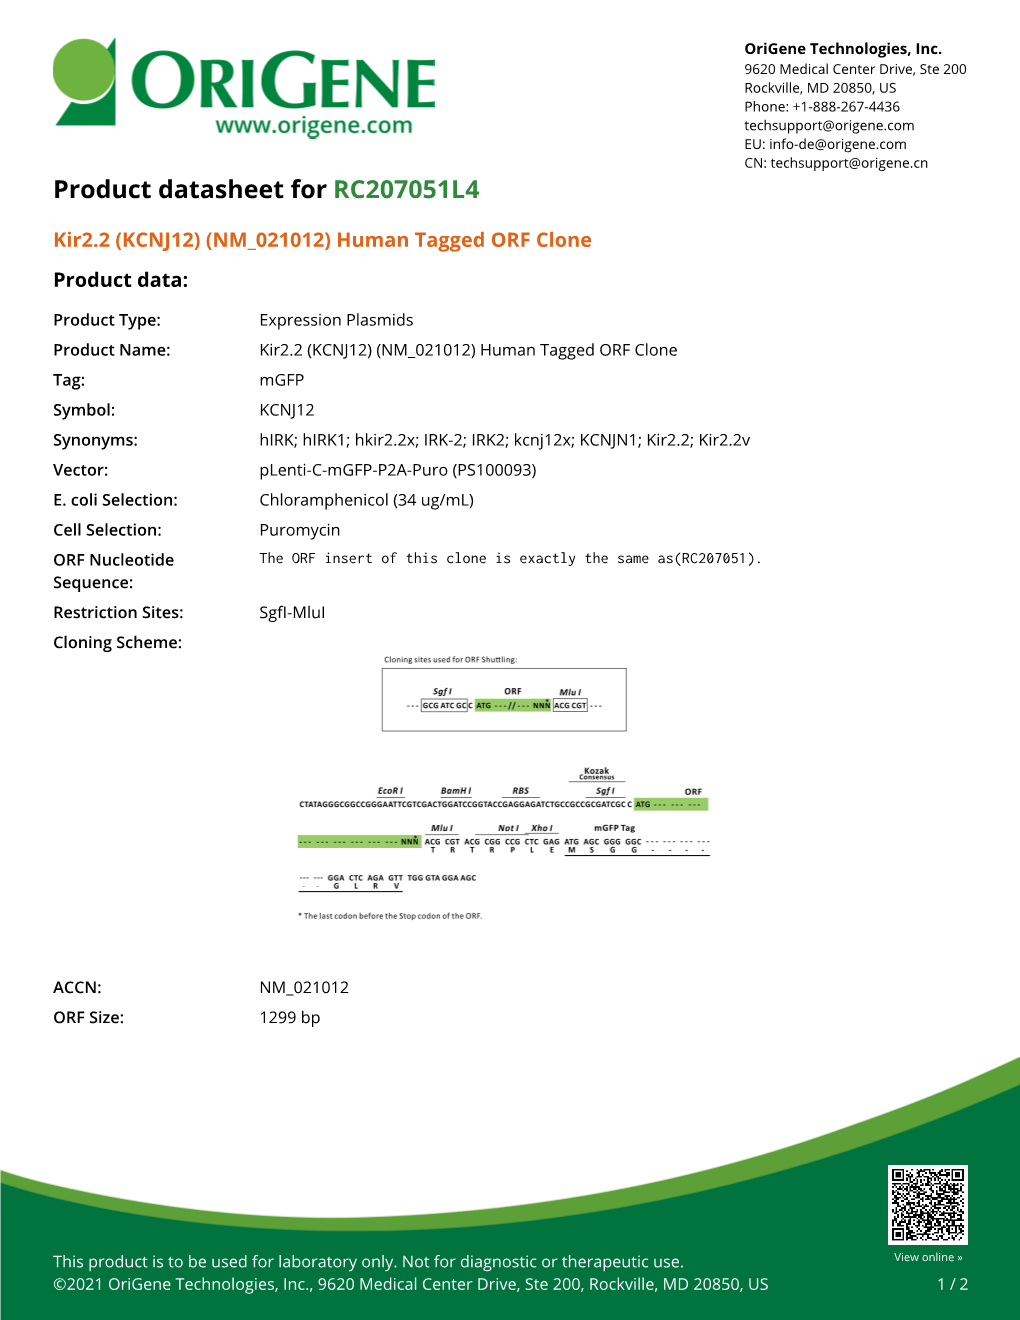 (KCNJ12) (NM 021012) Human Tagged ORF Clone Product Data